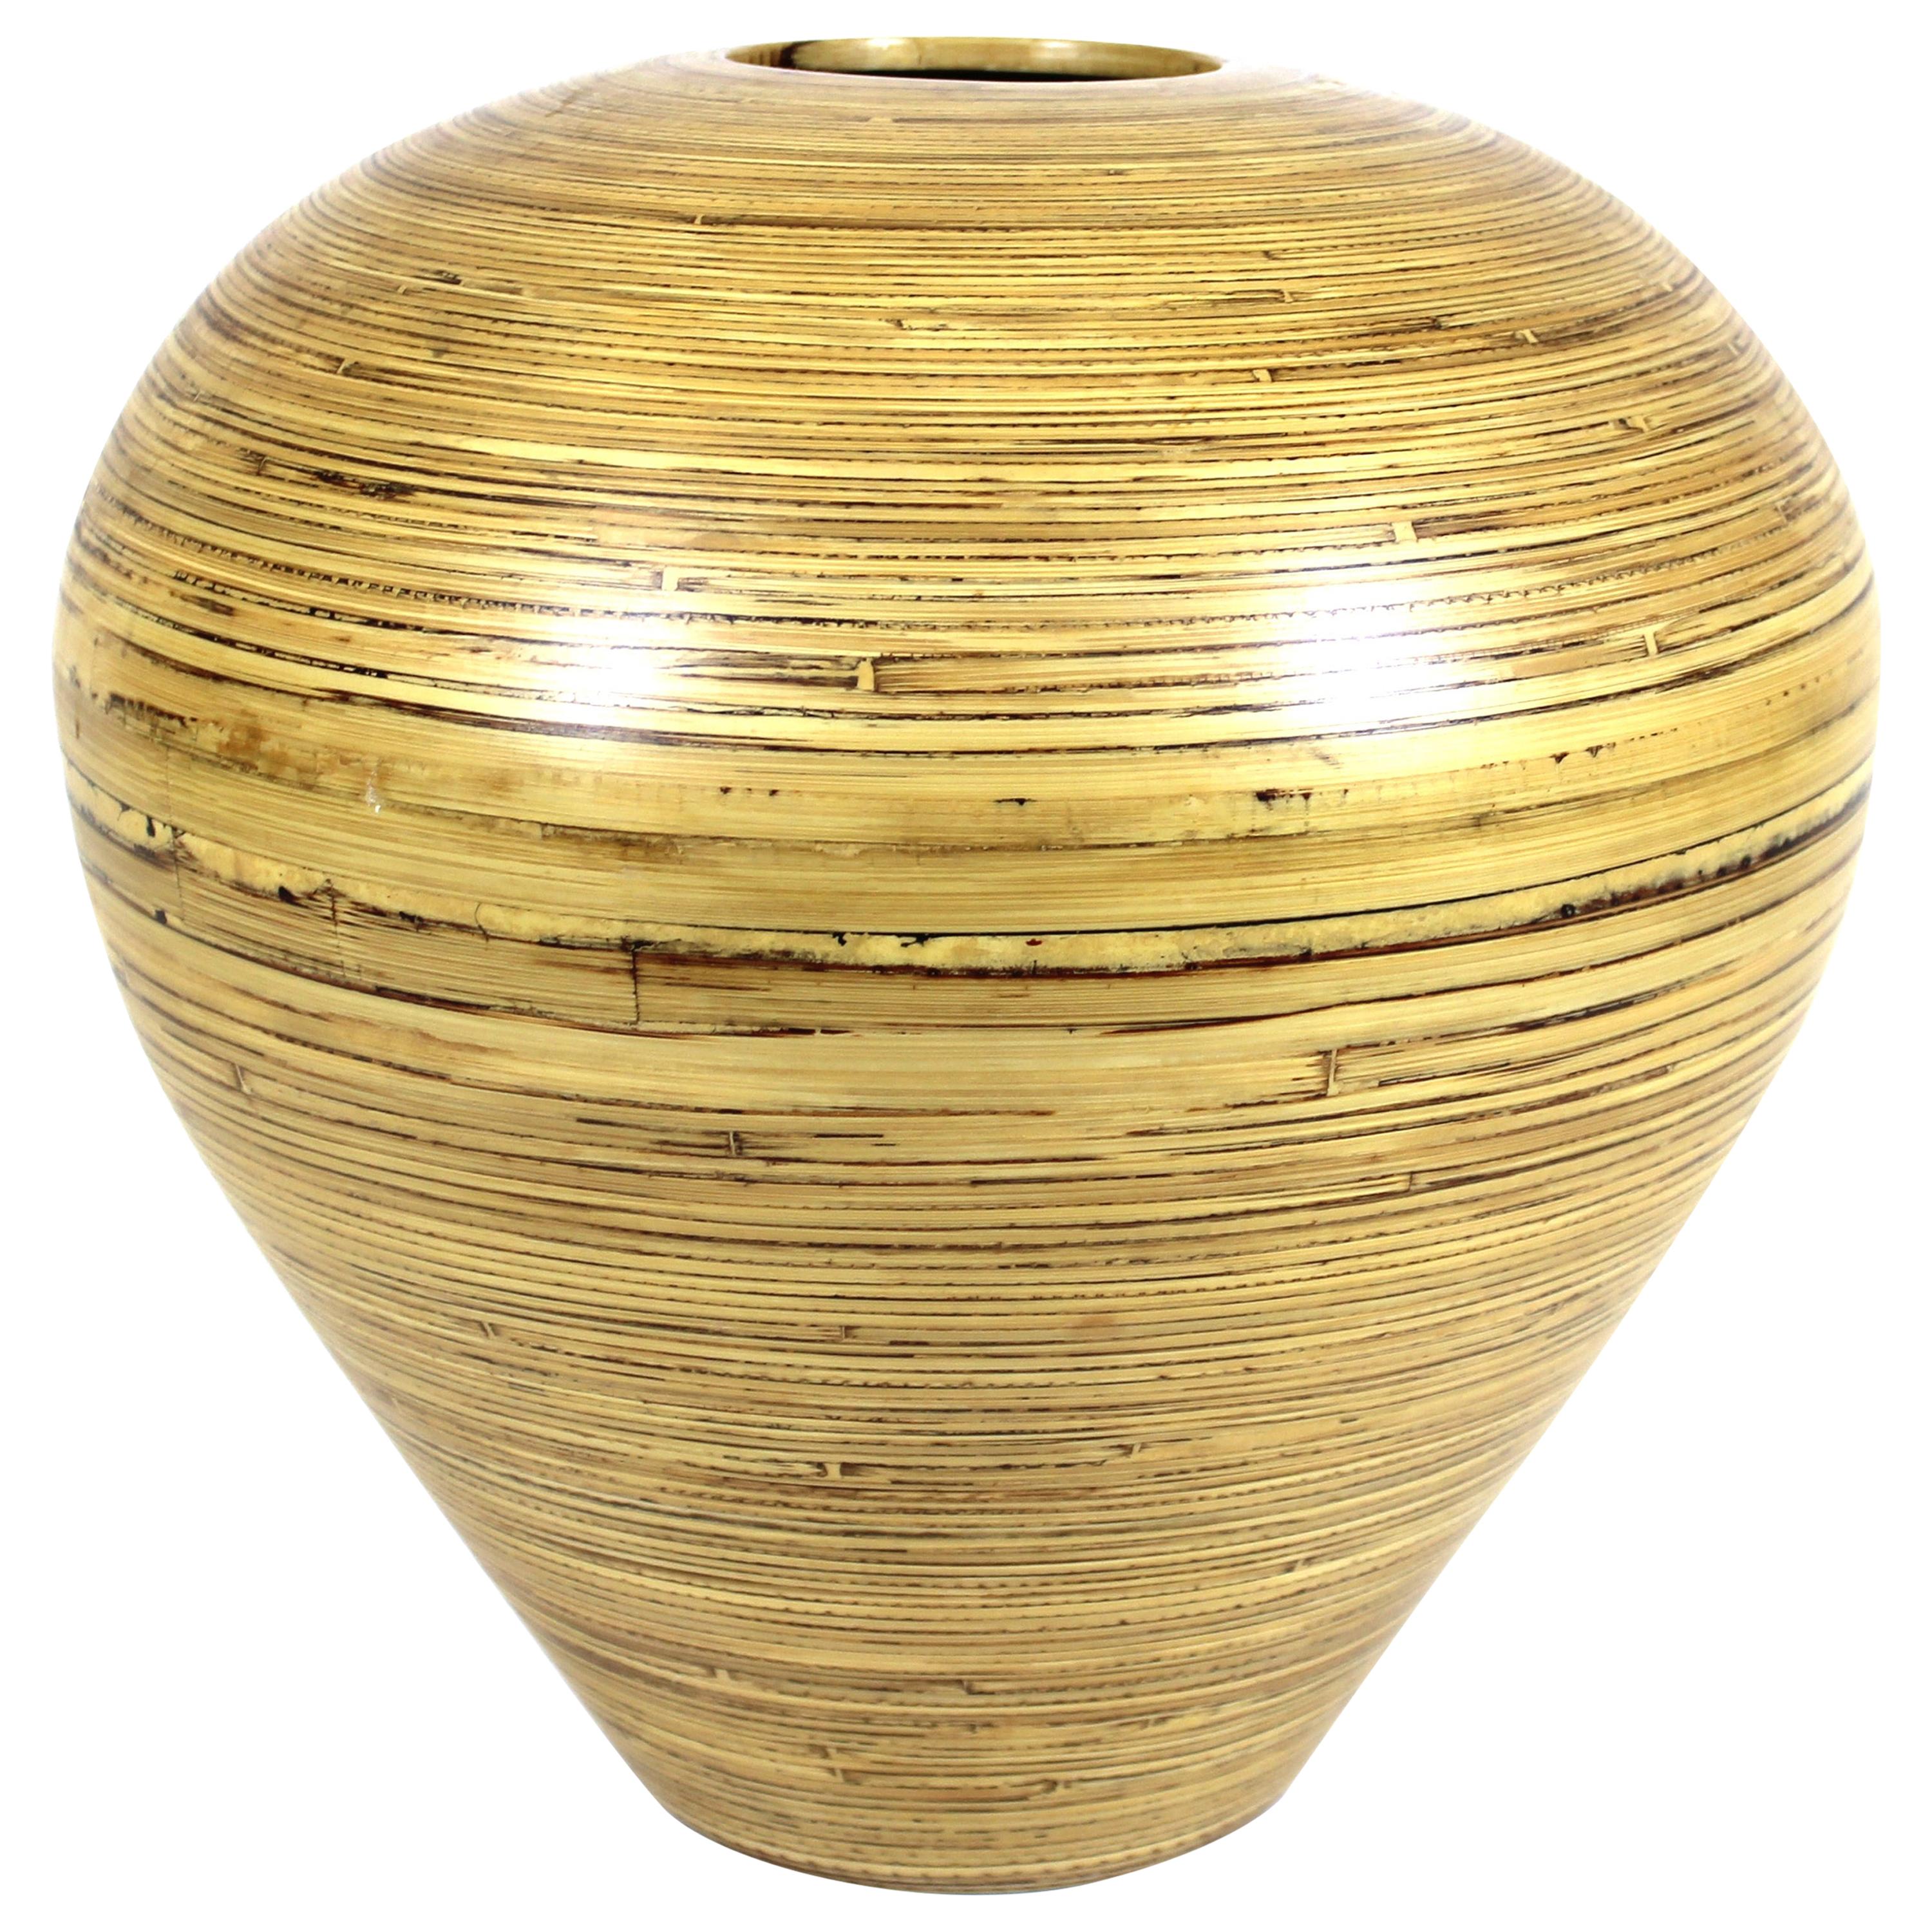 Moderne Vase aus gesponnenem Bambus